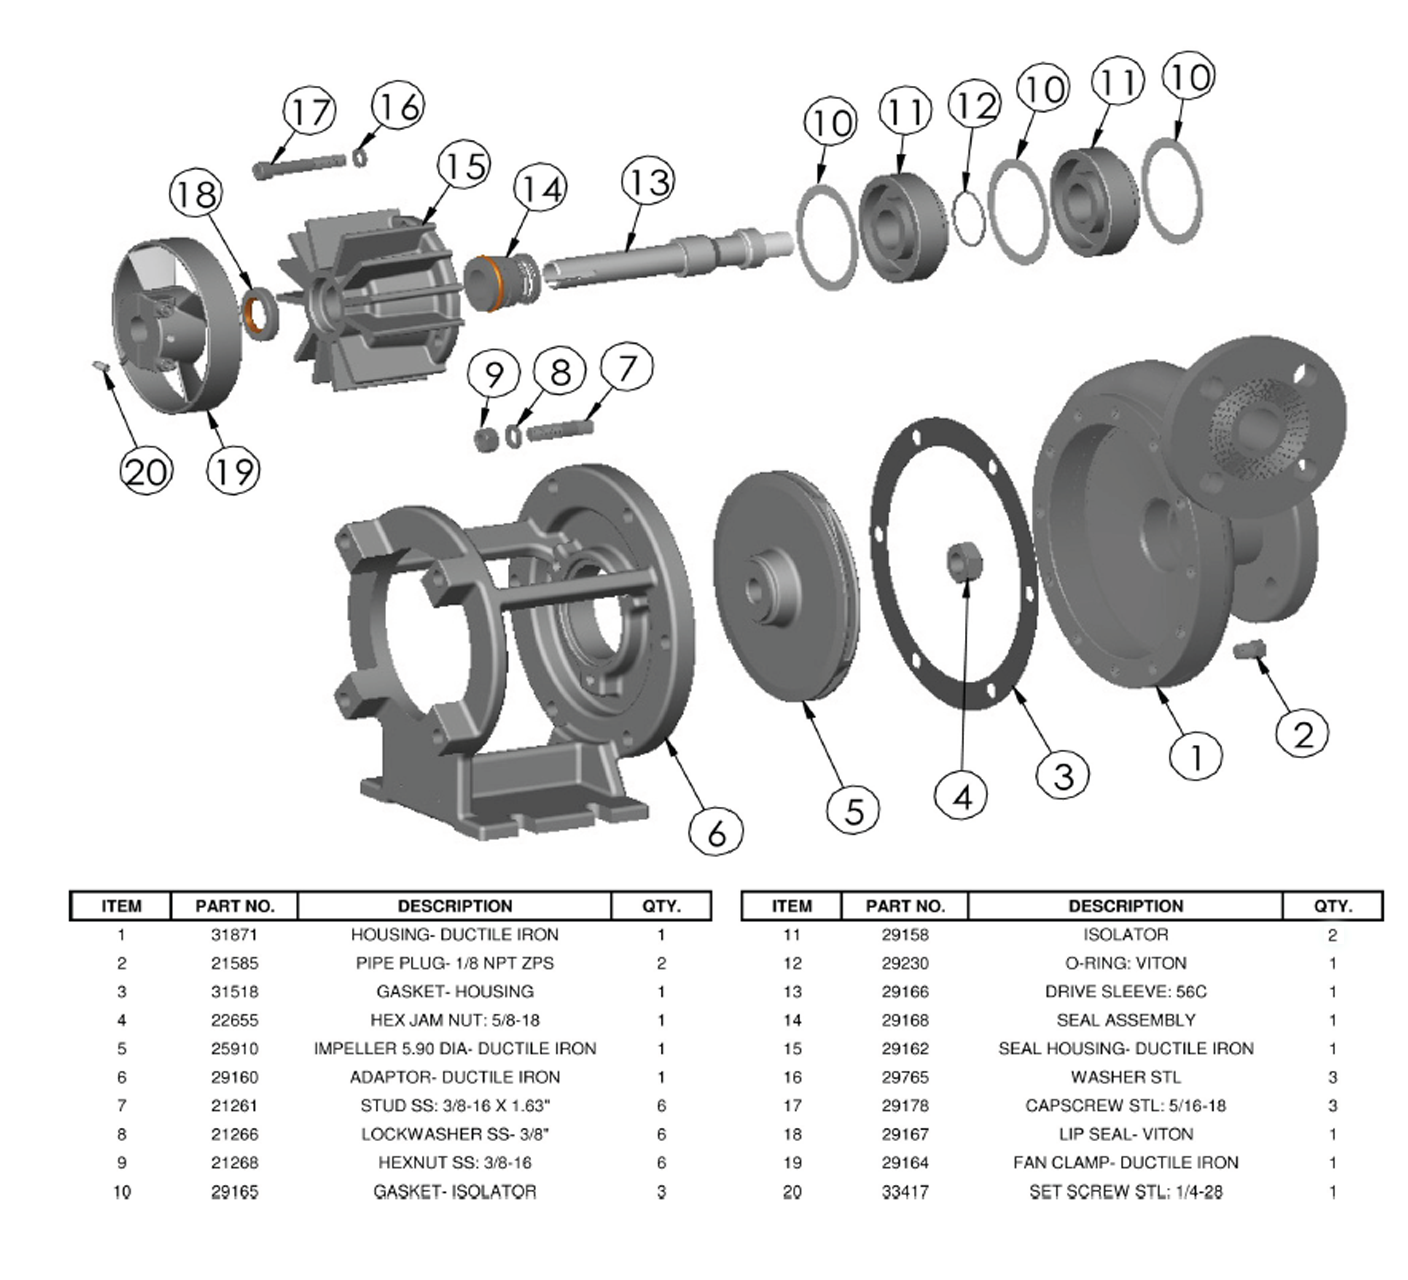 hto-80_parts-list-1